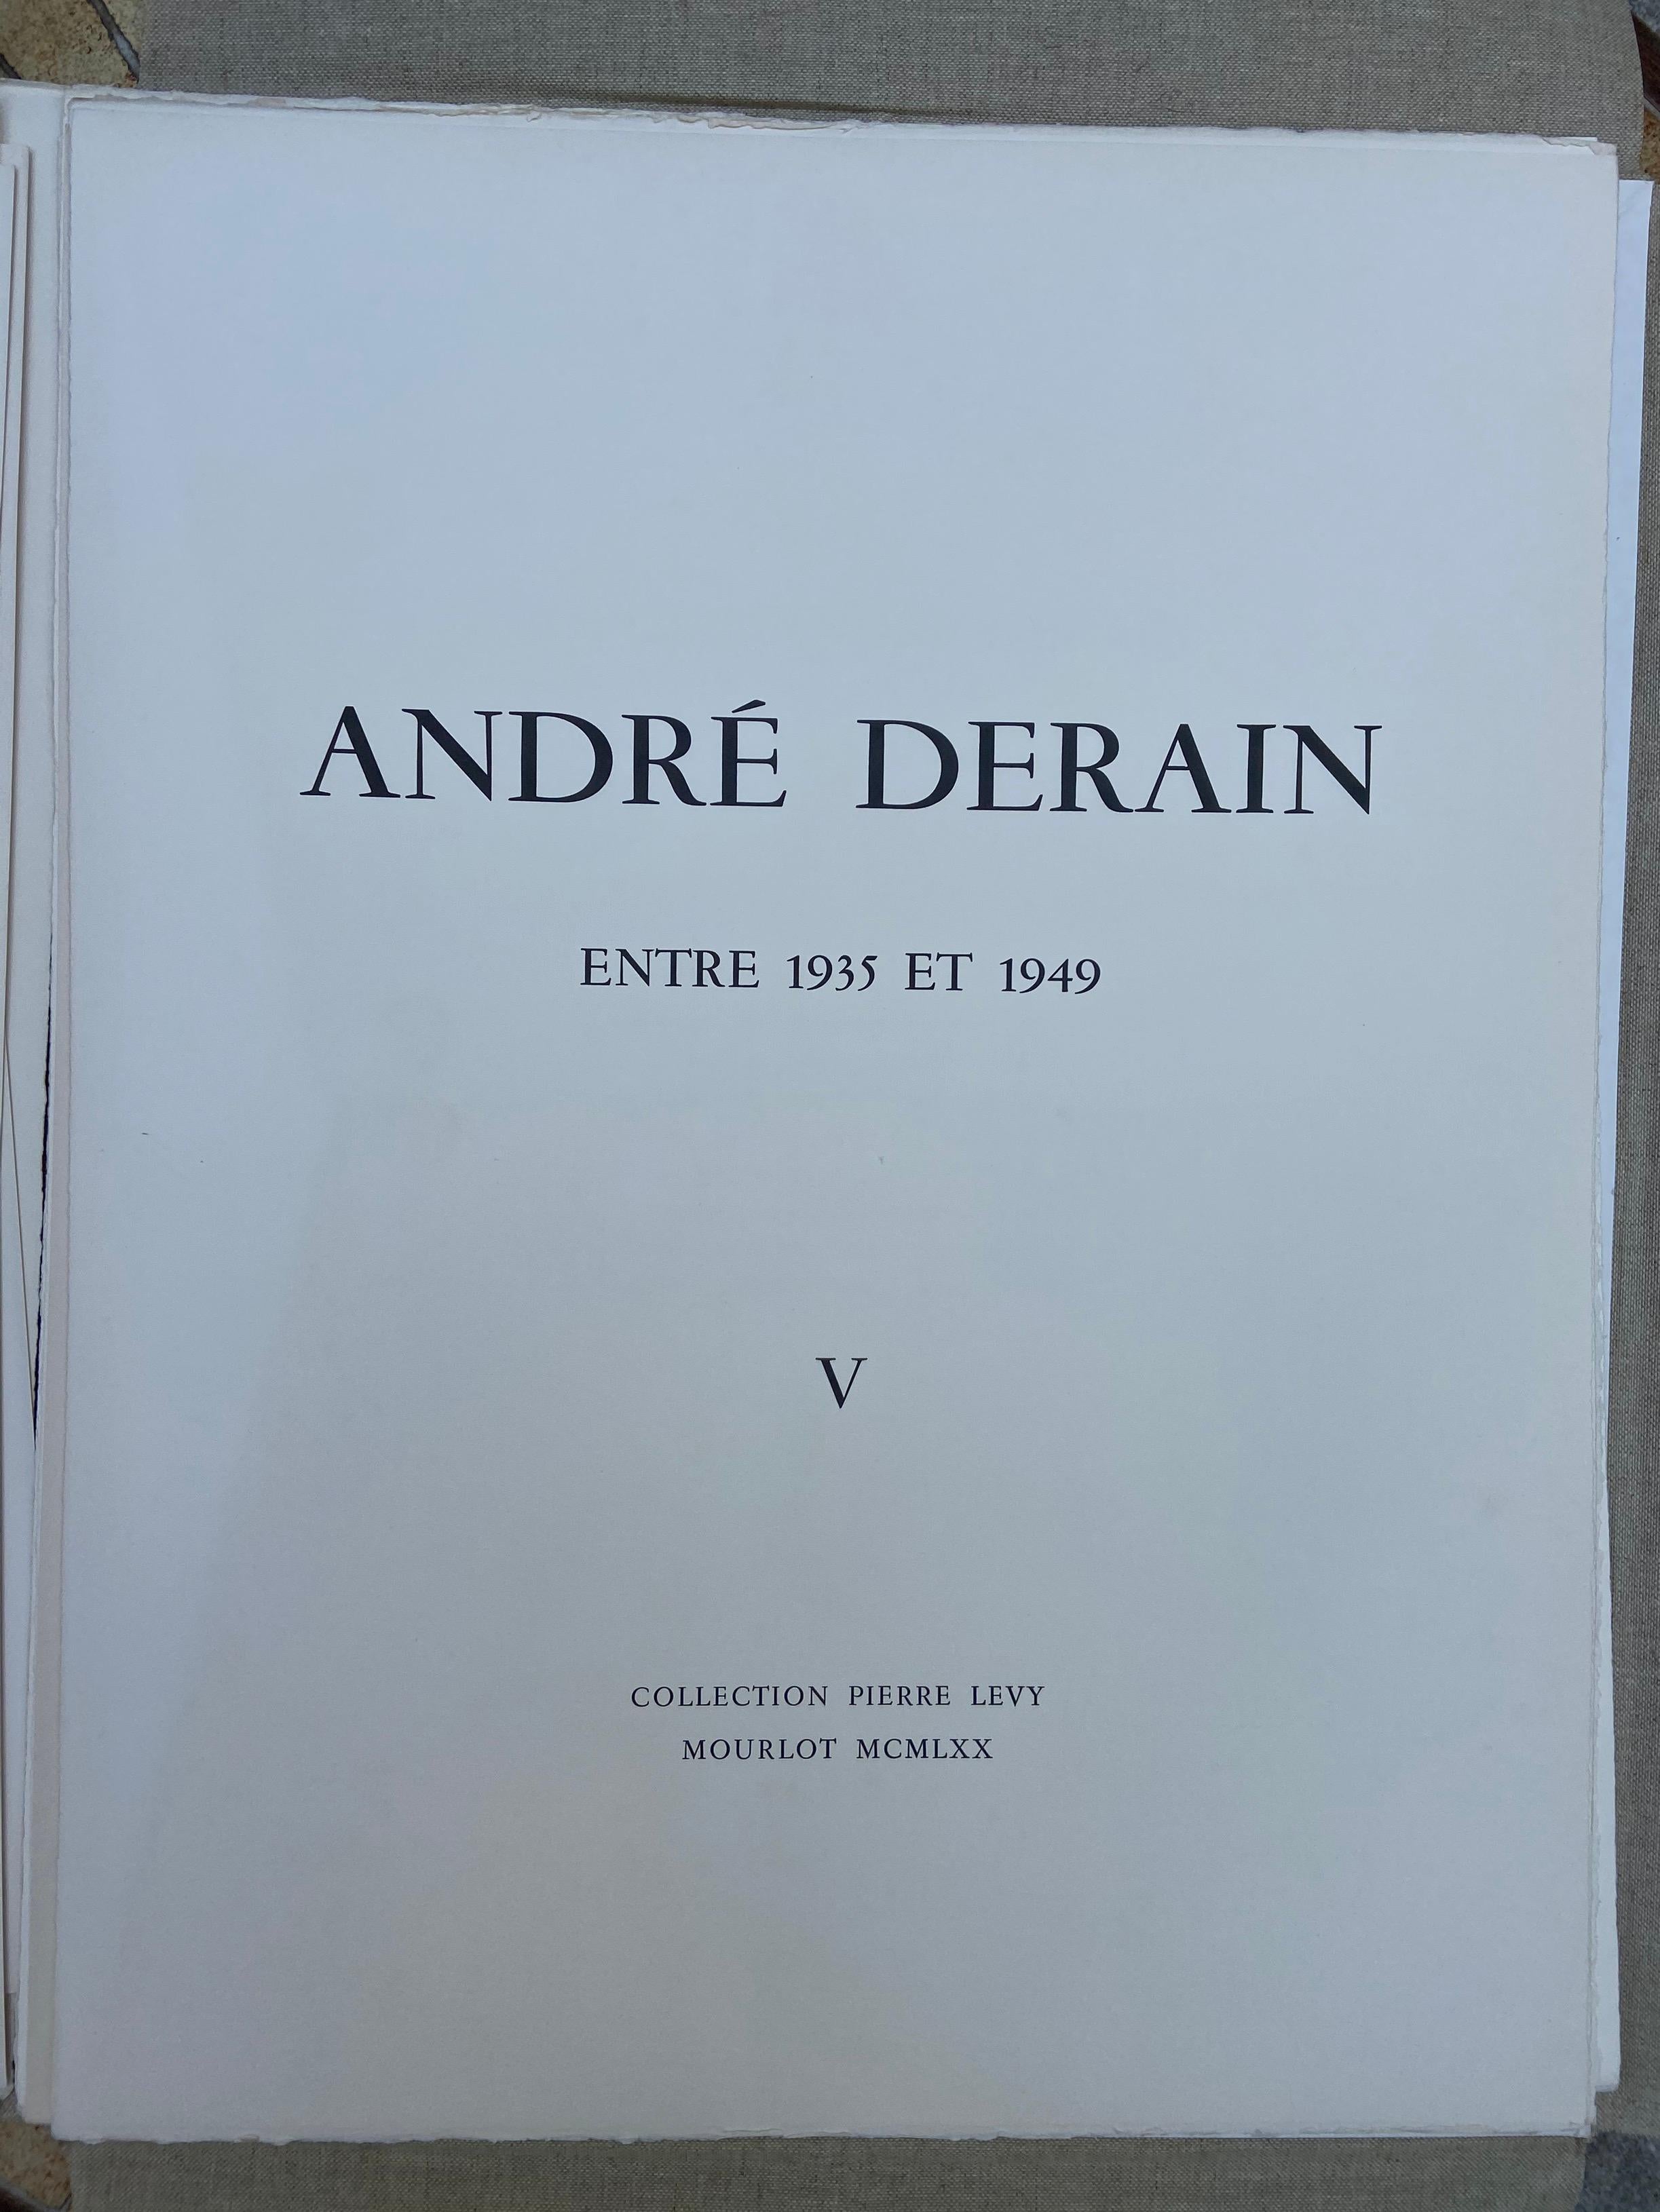 André Derain canvas portfolio between 1935 and 1949 V - Pierre Levy Collection
8 lithographs
Complete Portofolio
Measures: 68 x 52 cm 
1000 copies printed on arches vellum
Publisher Mourlot.